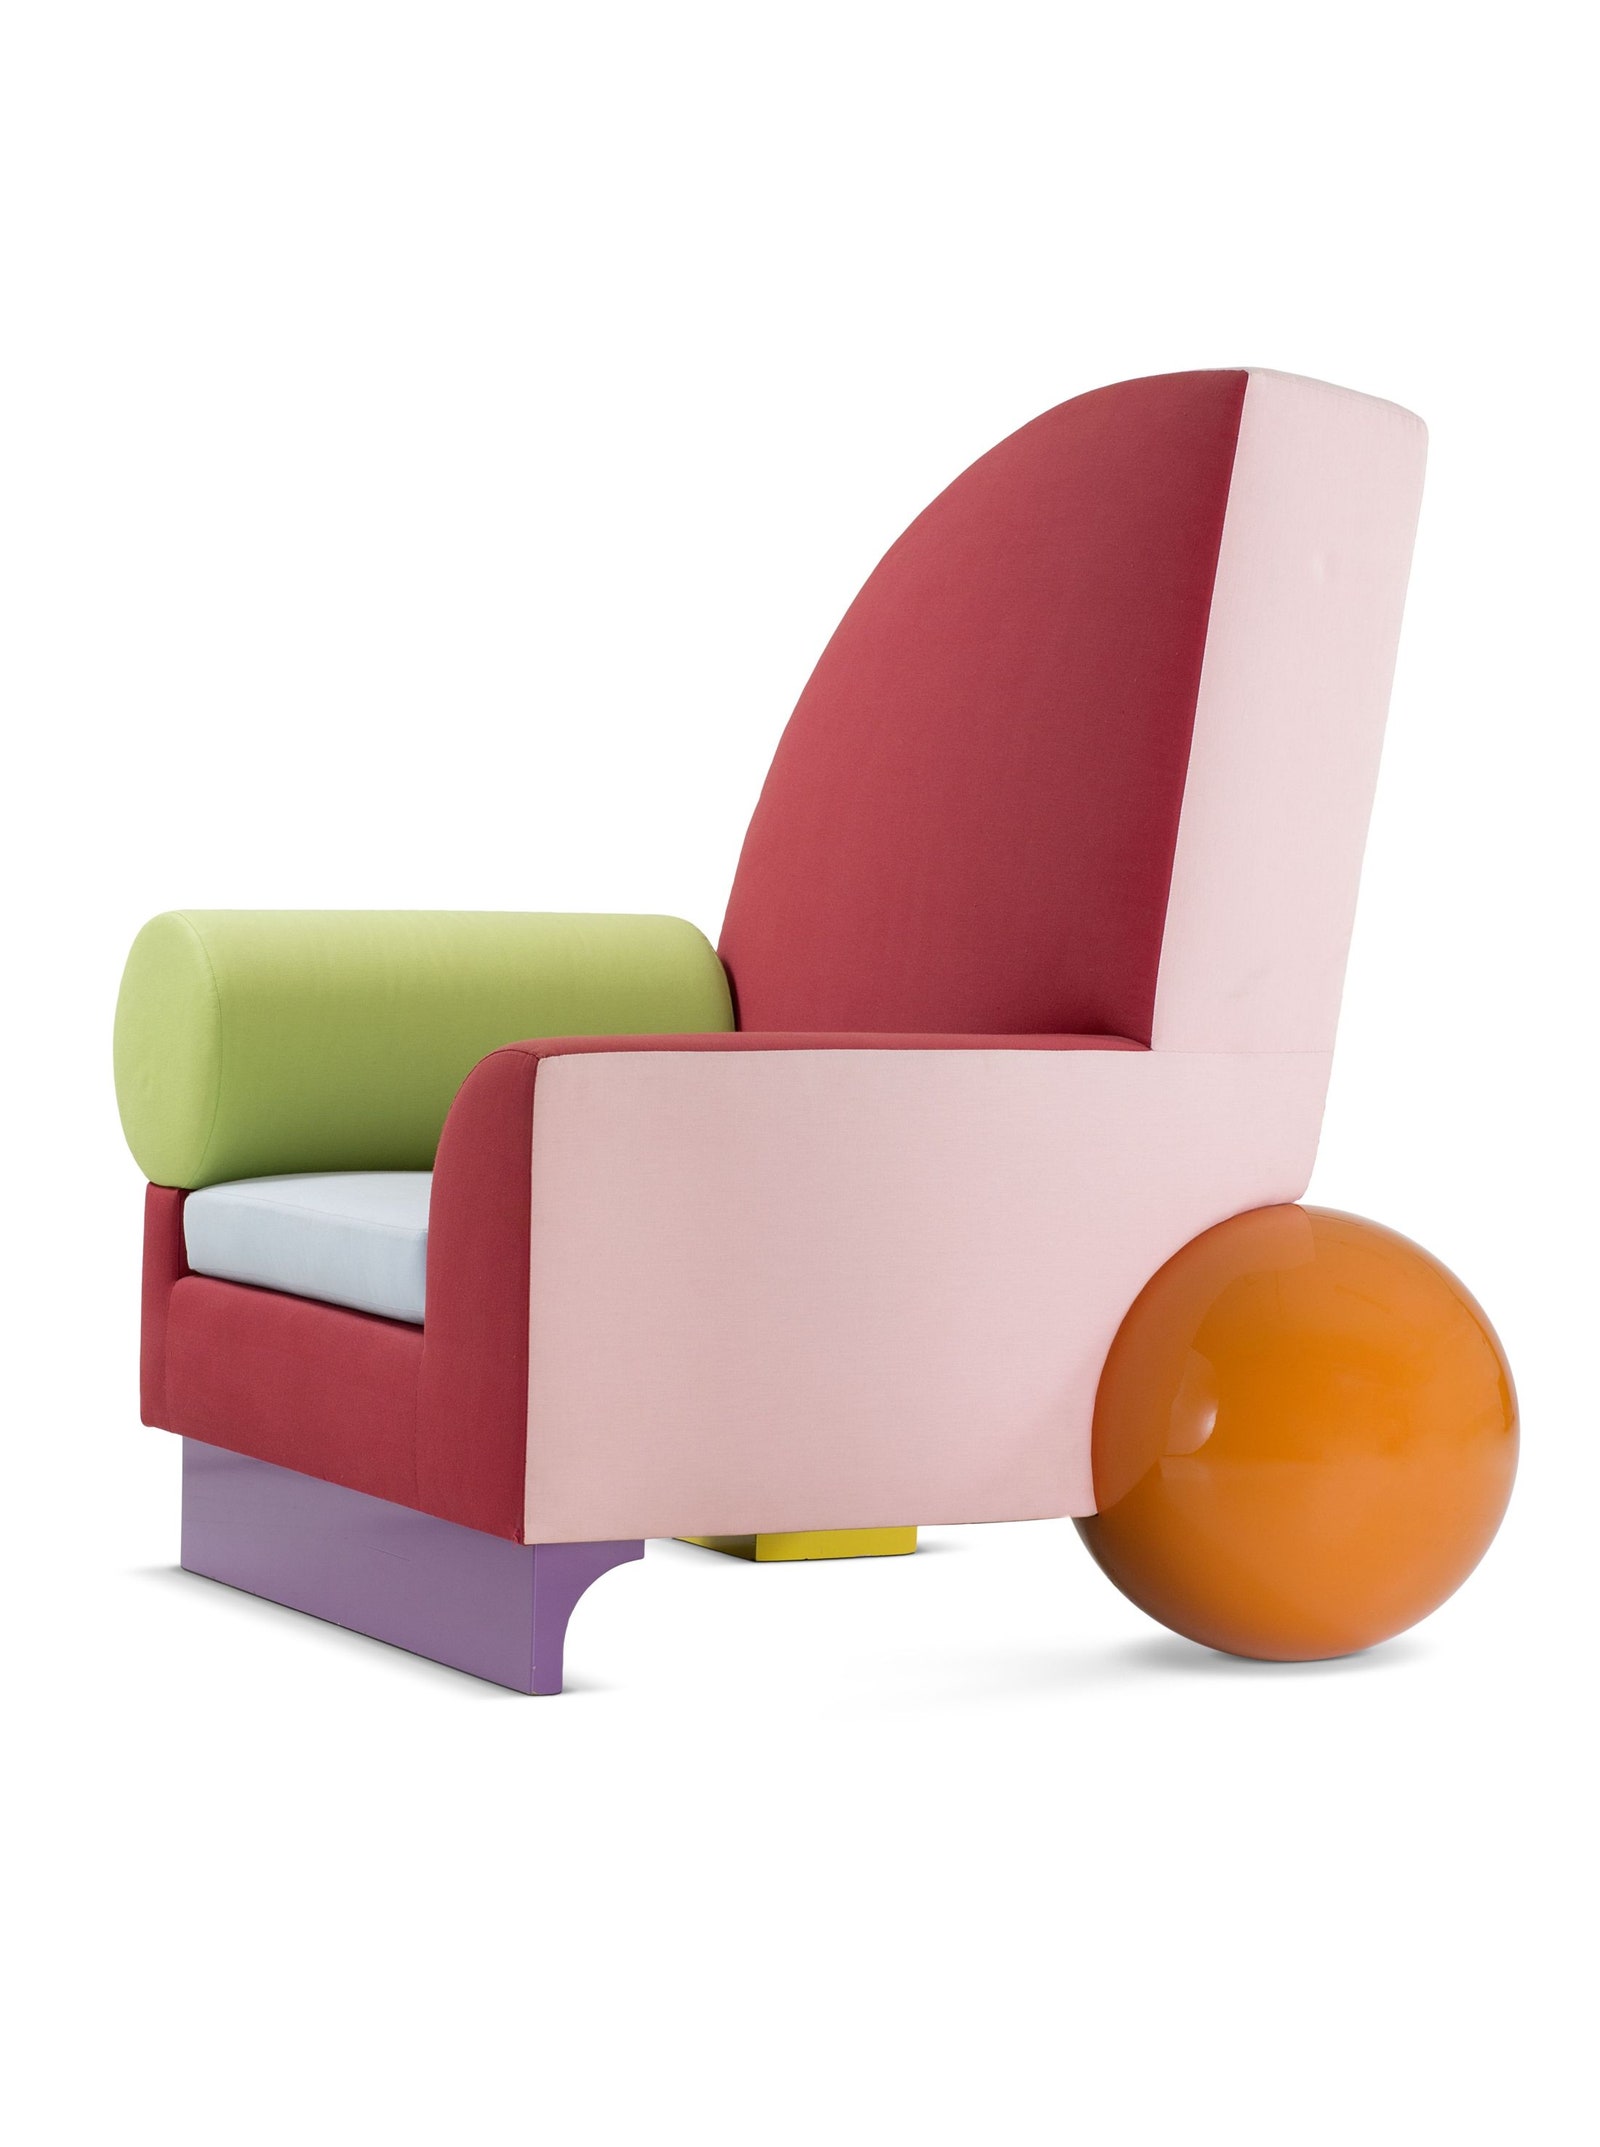 Peter Shire armchair “BelAir” 1982 © Peter Shire © Vitra Design Museum photo Jürgen Hans